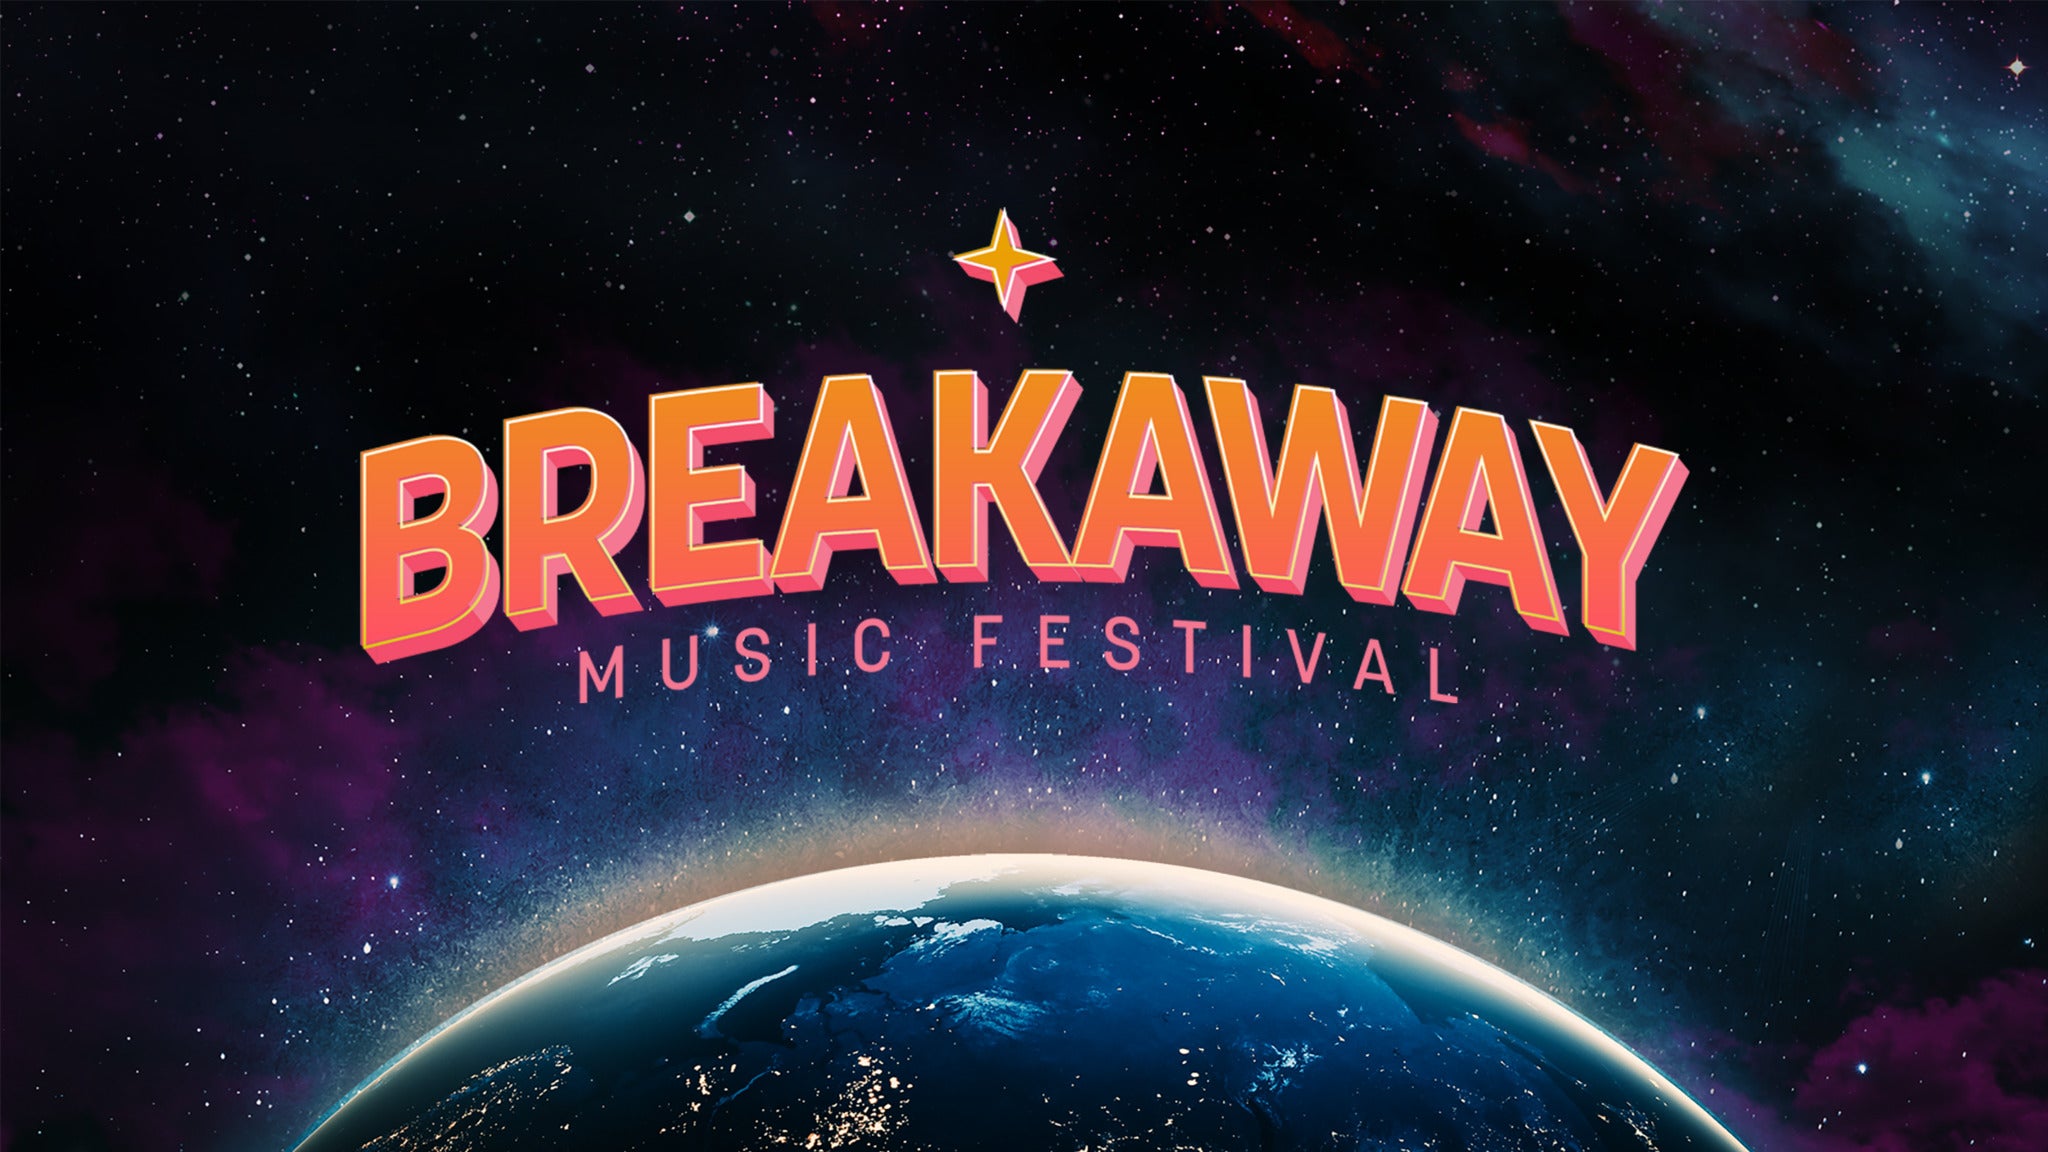 Breakaway Music Festival - Grand Rapids presale information on freepresalepasswords.com